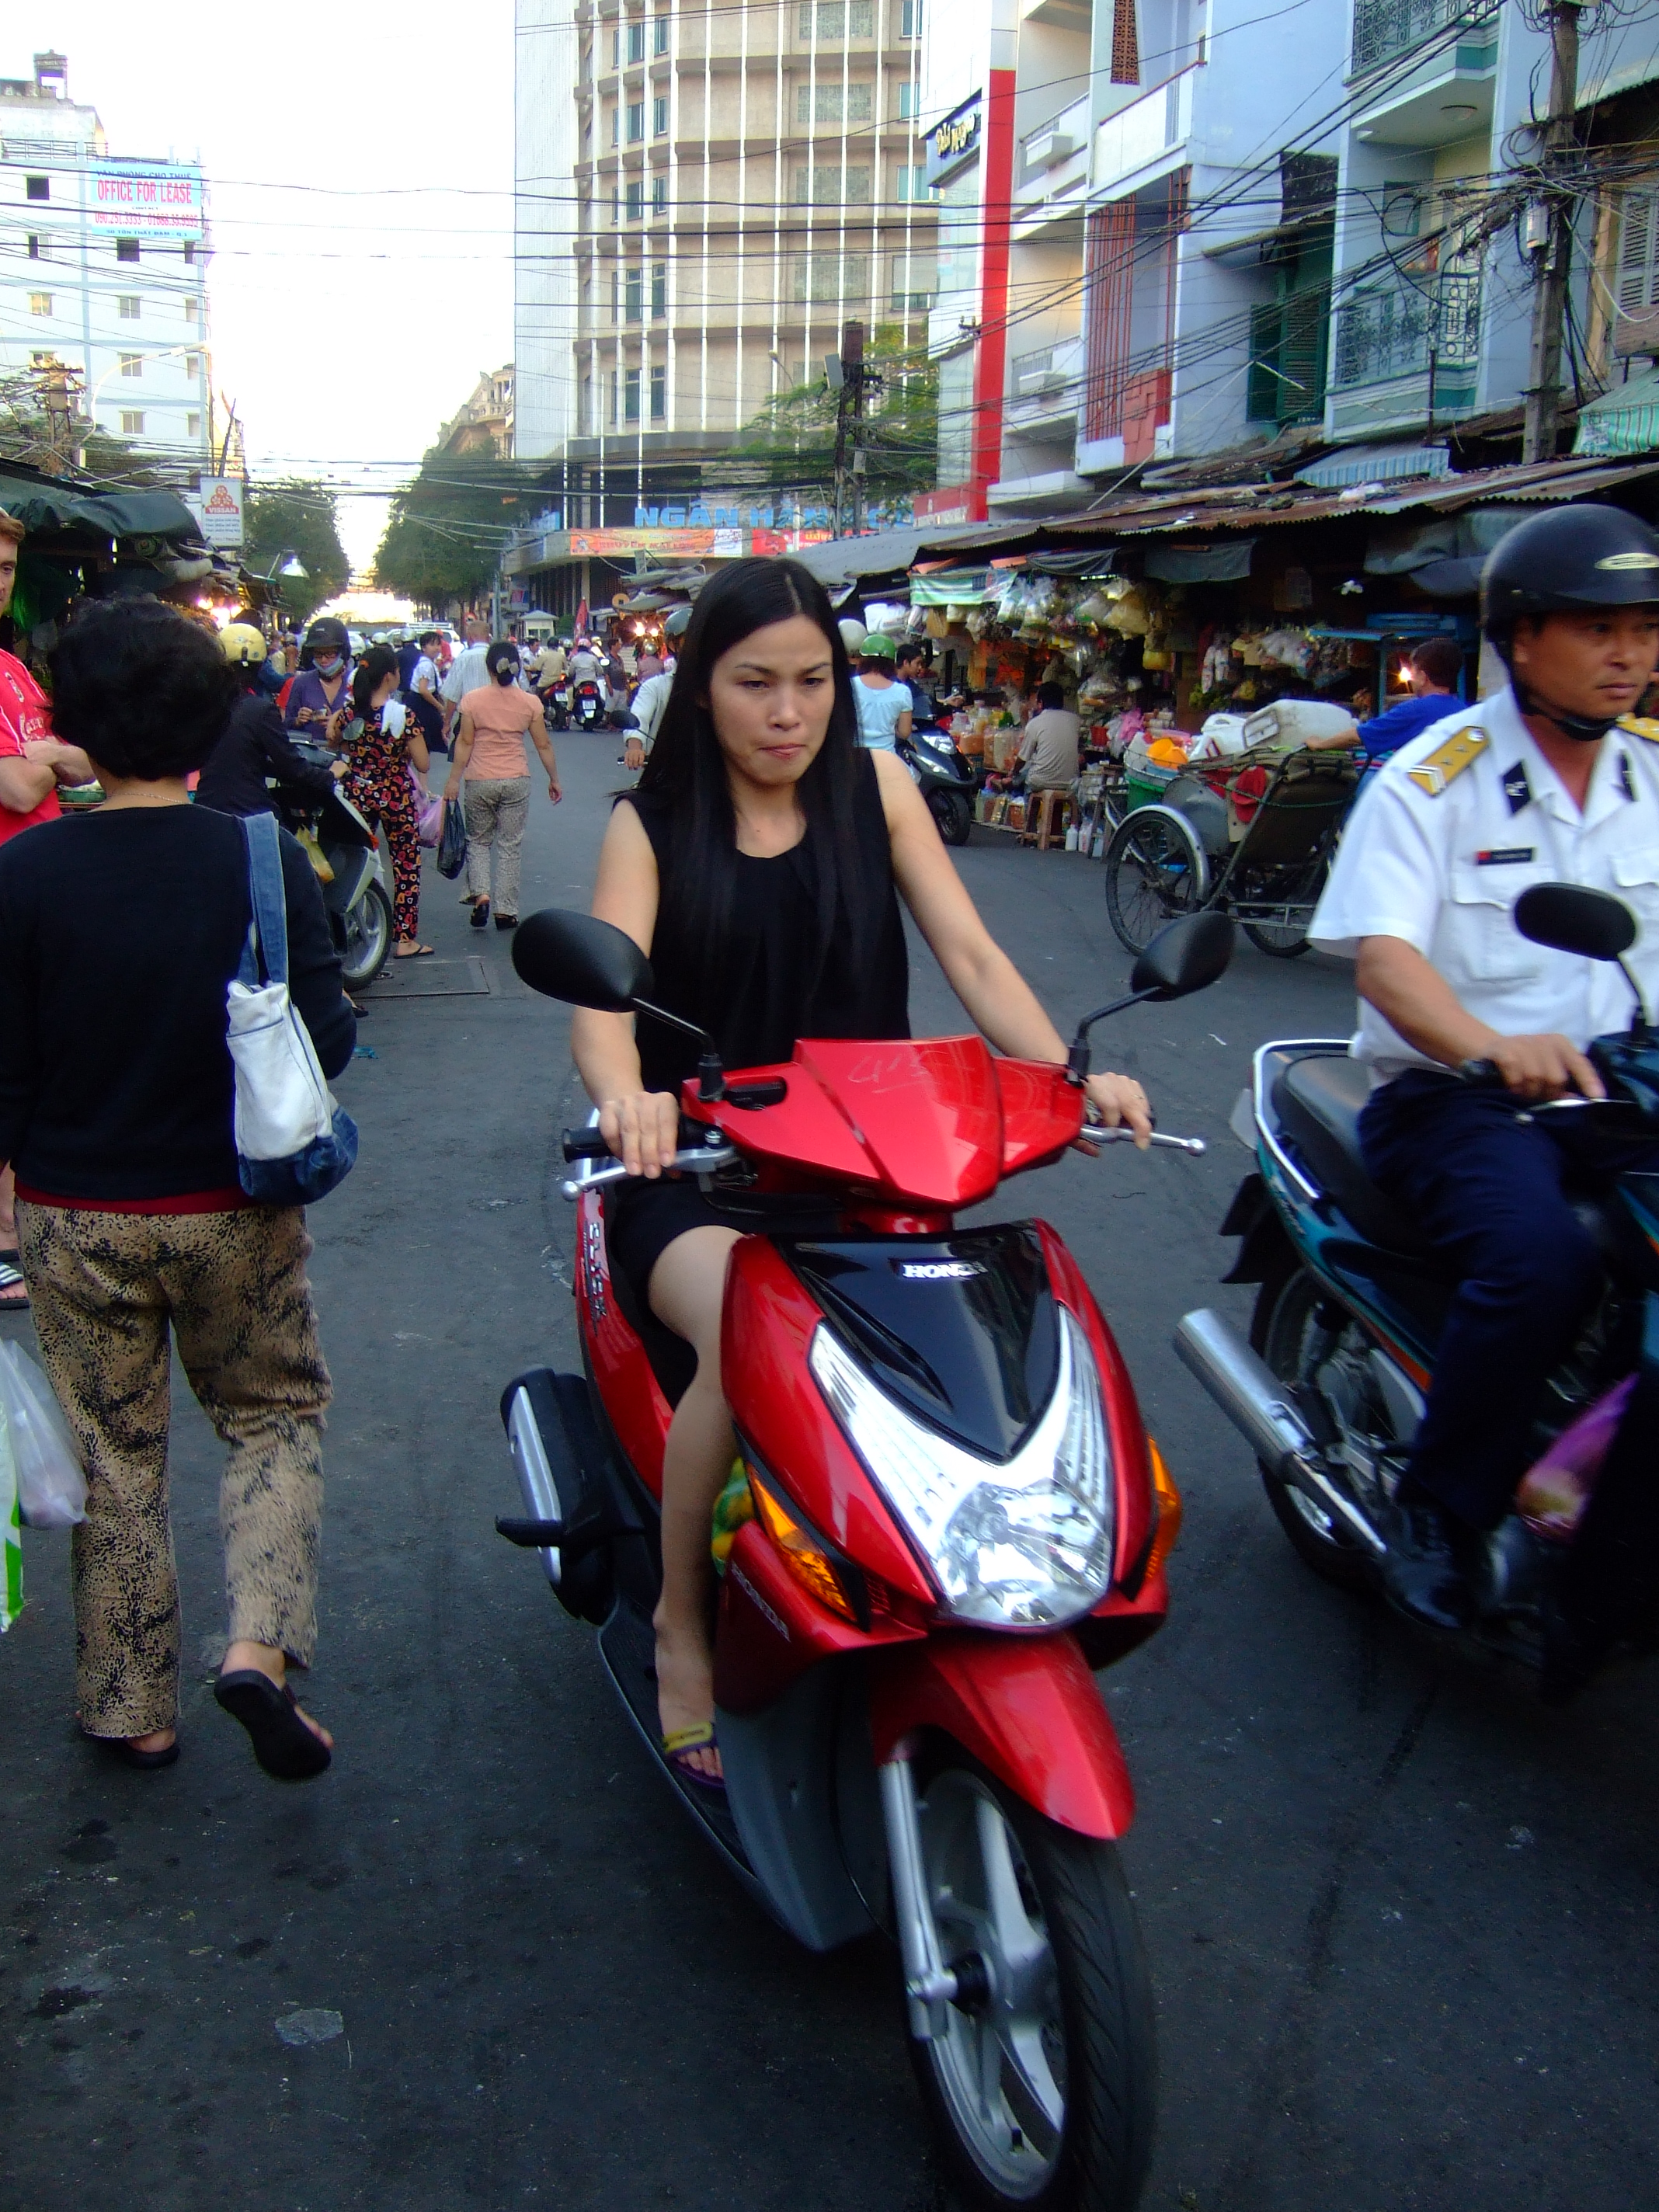 Vietnam Ho Chi Minh City scooters street scenes Feb 2009 02